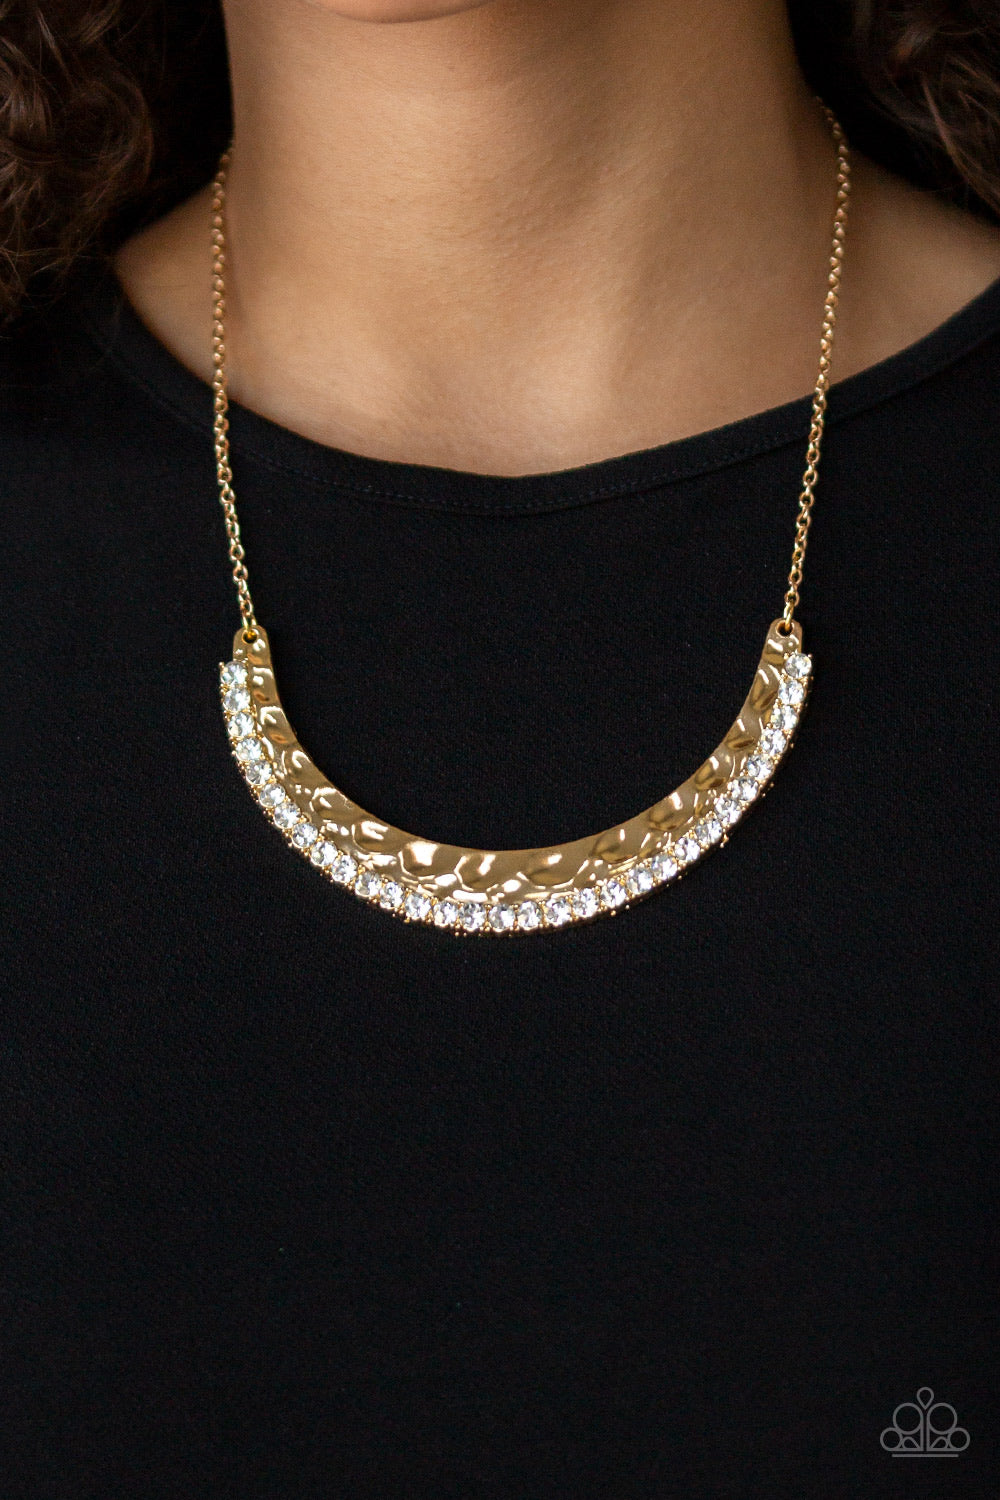 Impressive Gold-Necklace